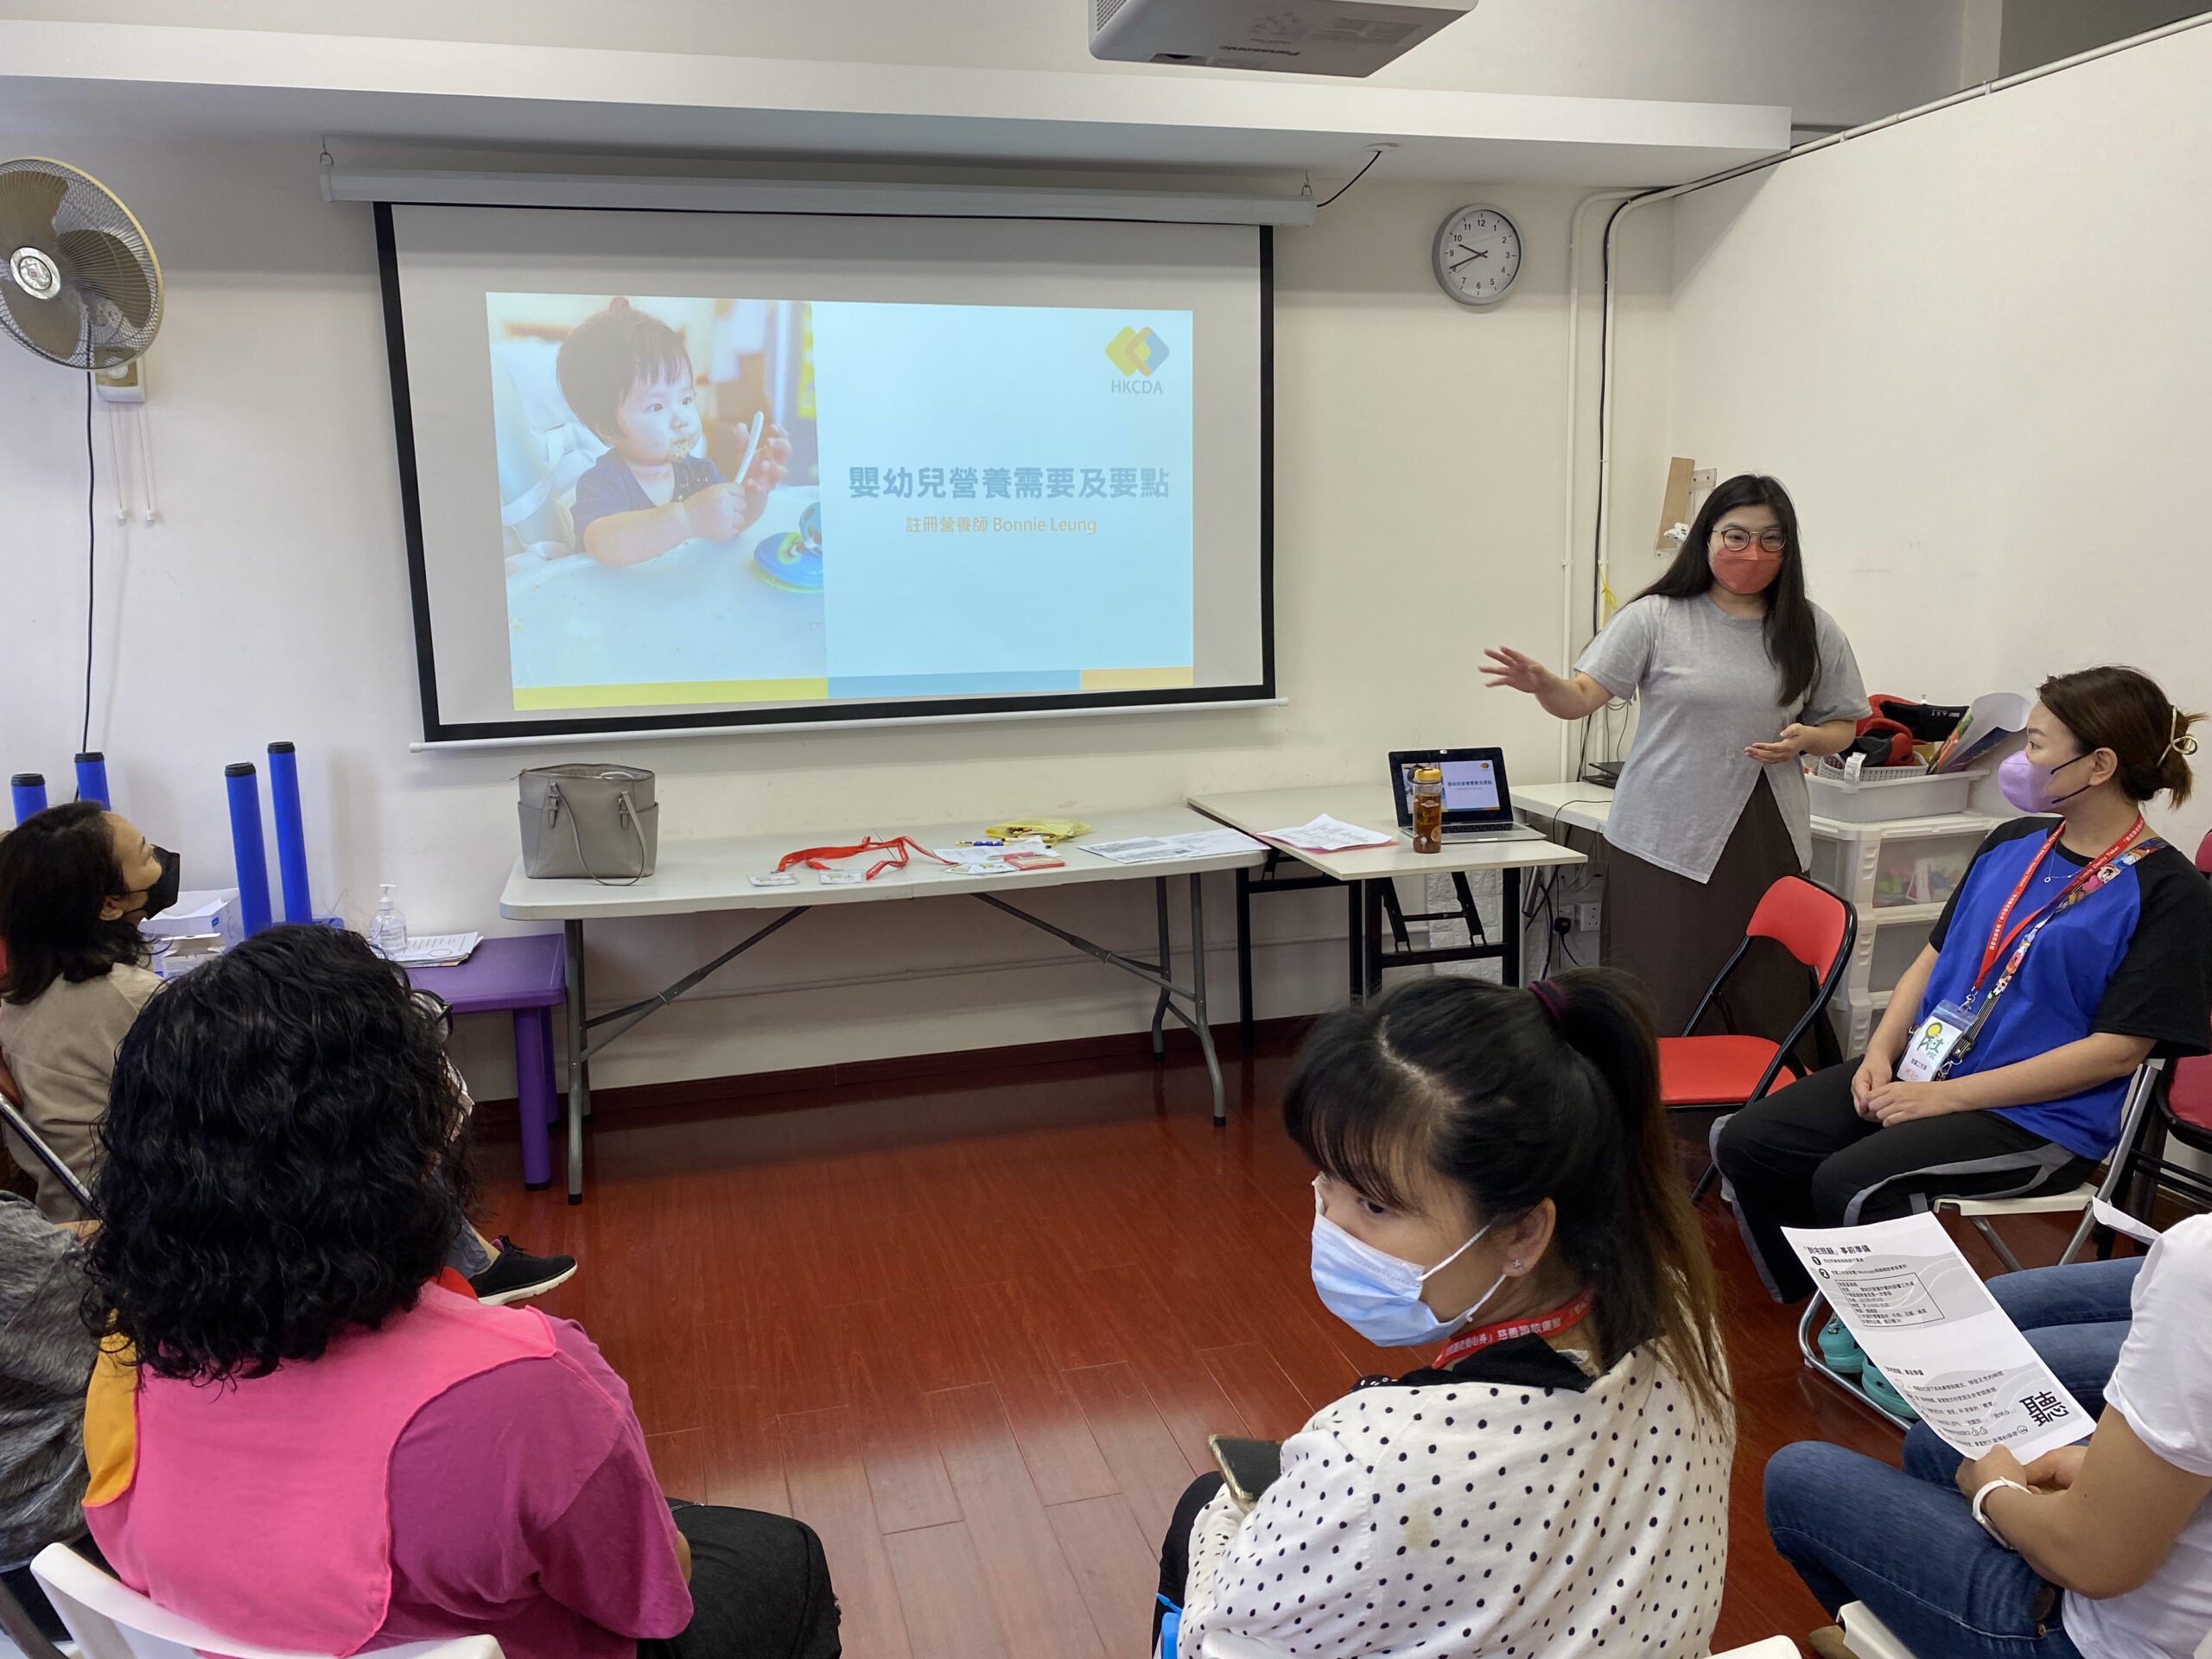 Peer Support Training Workshop on Babies’ nutrition Knowledge